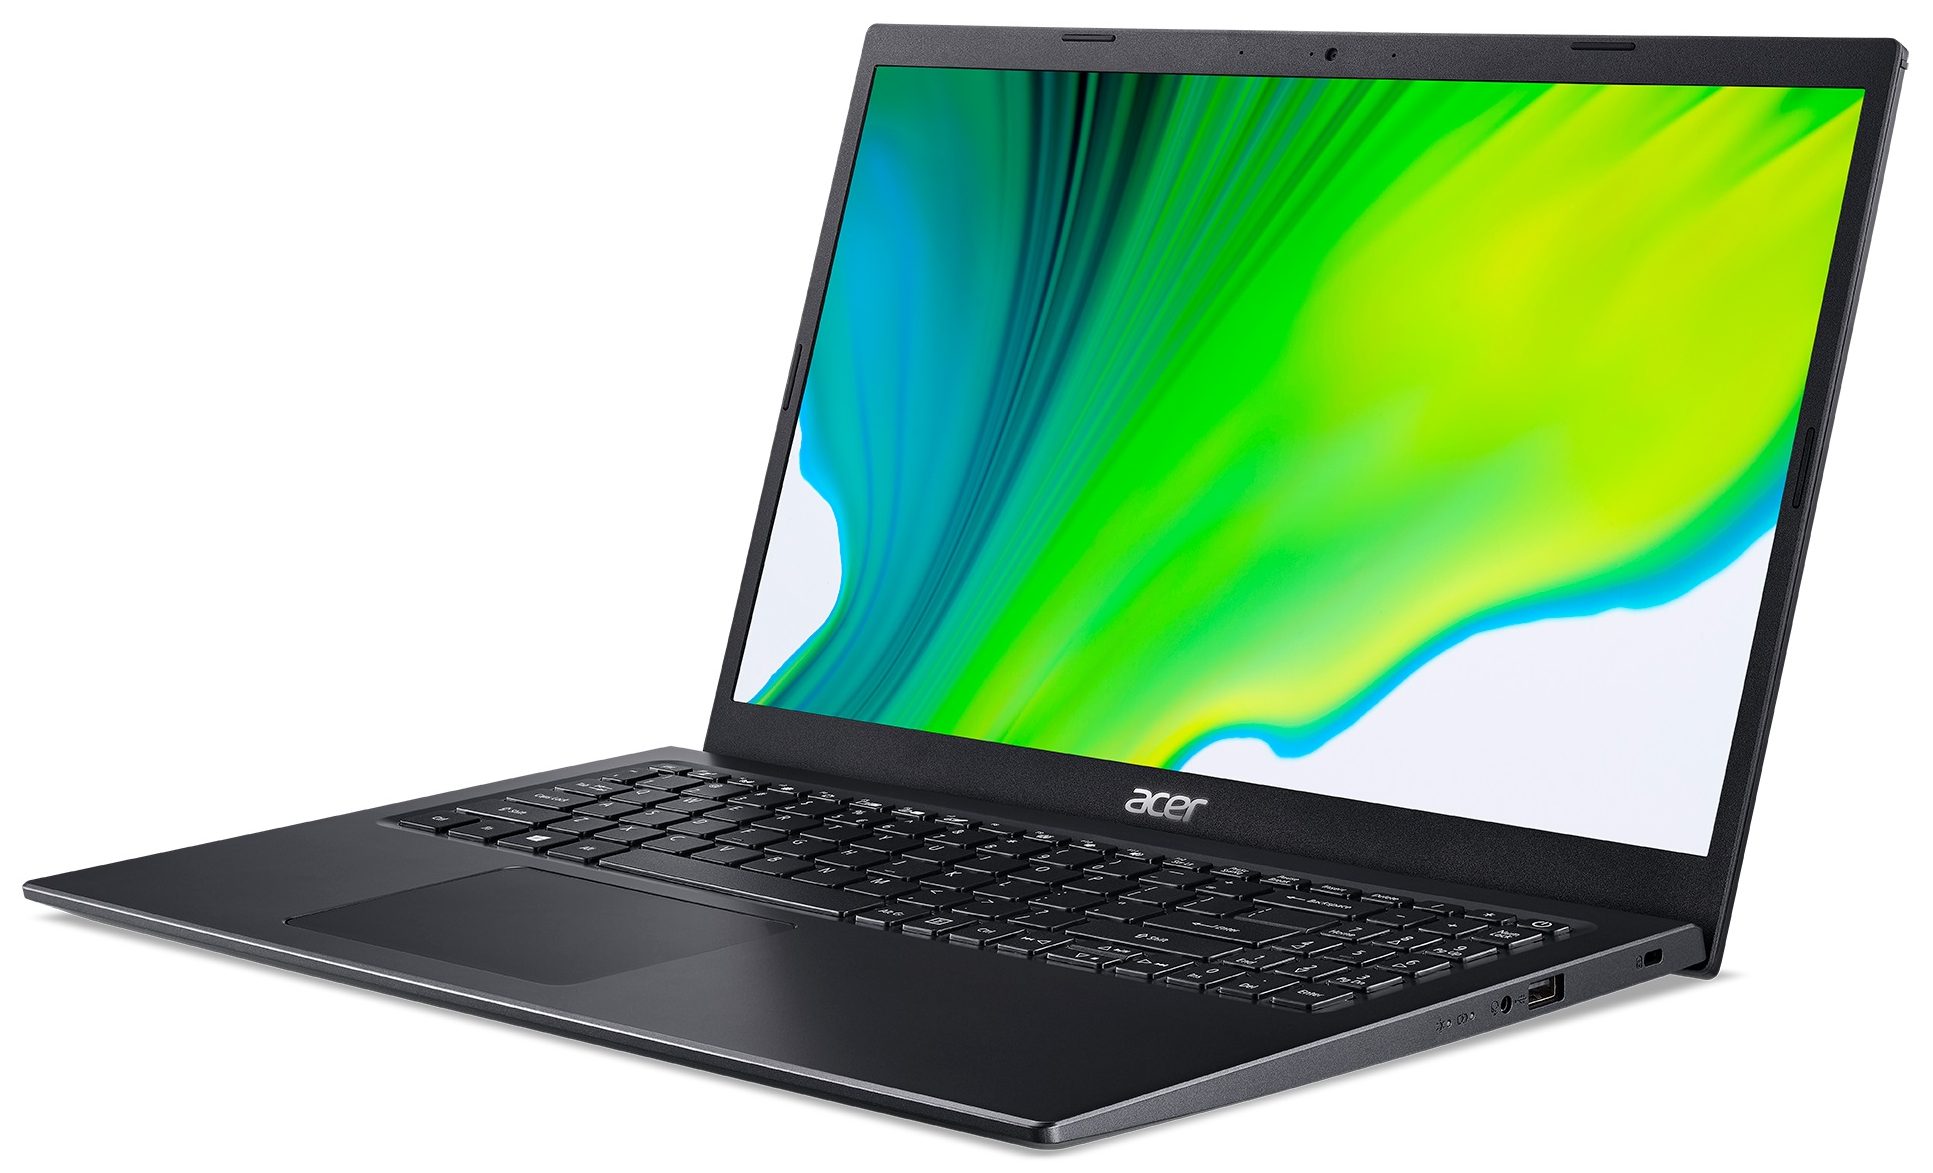 Acer Aspire 5 - i5-1135G7 · Xe Graphics G7 80 EU · 15.6”, Full HD (1920 x 1080), IPS · 512GB SSD · 2x 4GB DDR4, 3200 MHz · Windows 10 Home | LaptopMedia.com